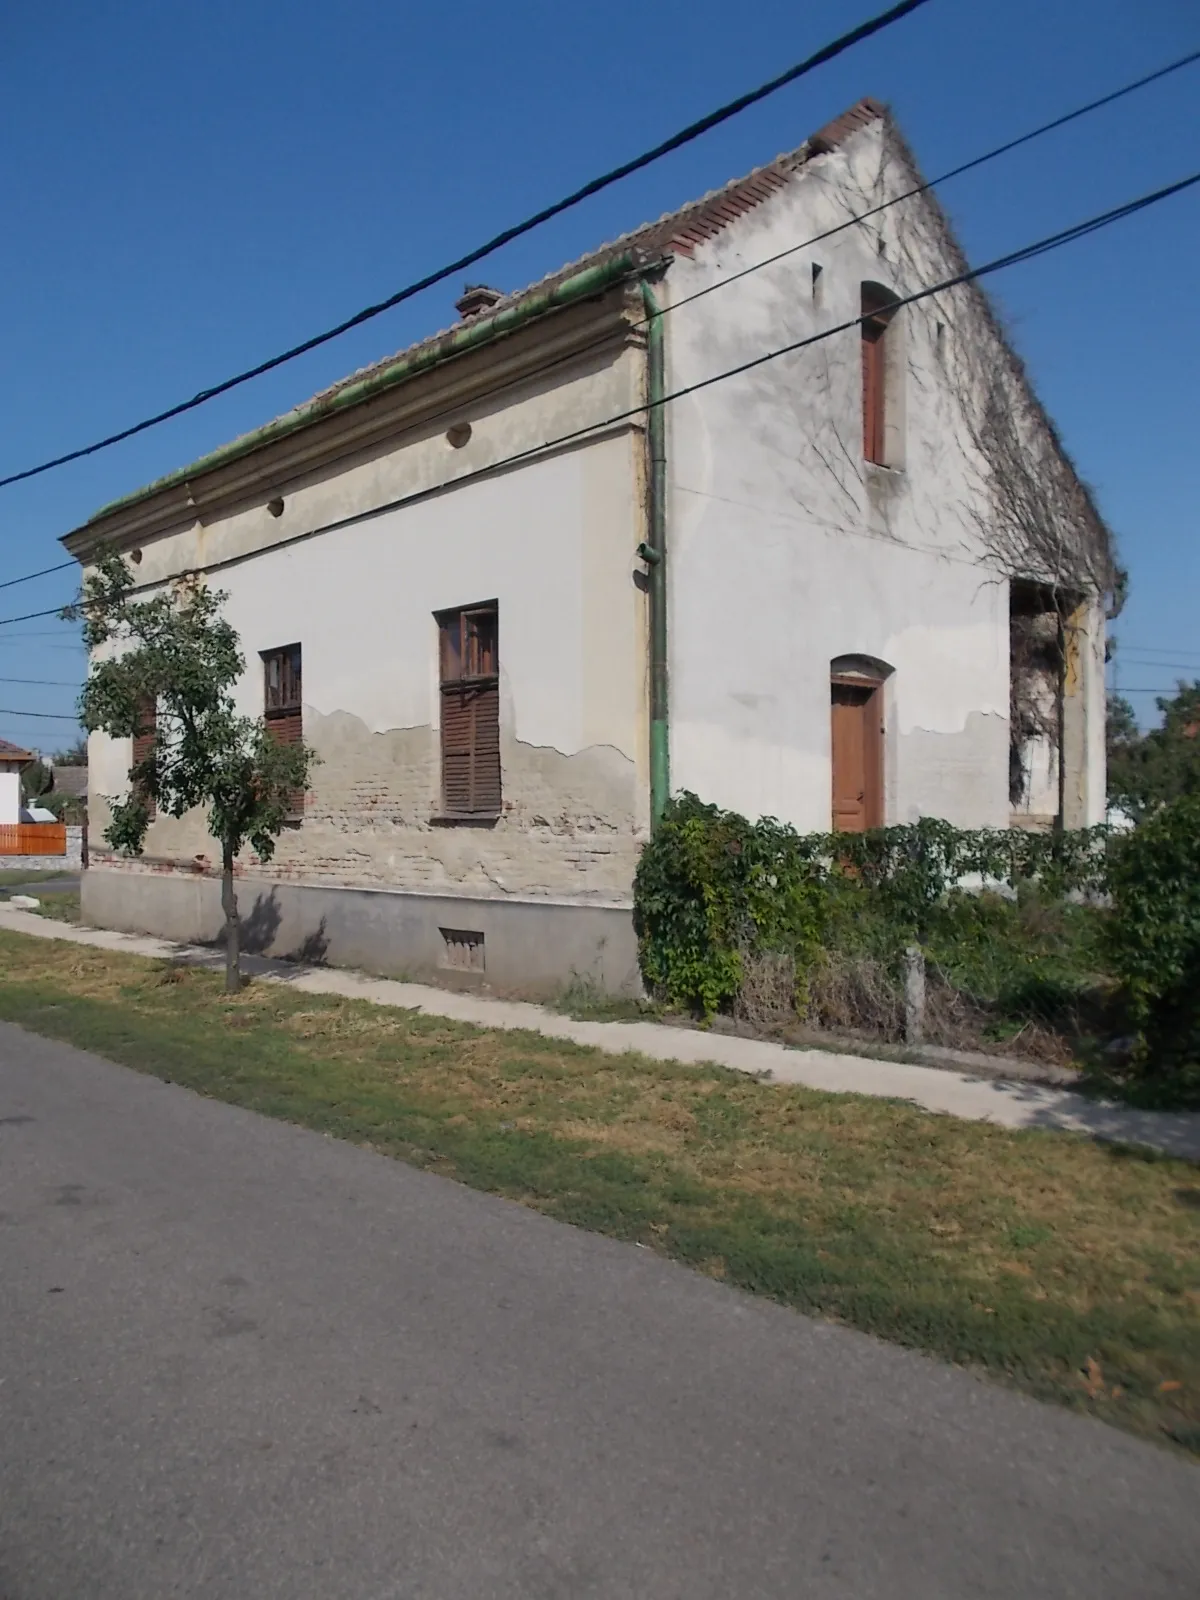 Photo showing: : House with loft door,-on nonstreetside side,-without ladder or stairs. - József A. Street, Hajdúnánás, Hajdú-Bihar County, Hungary.